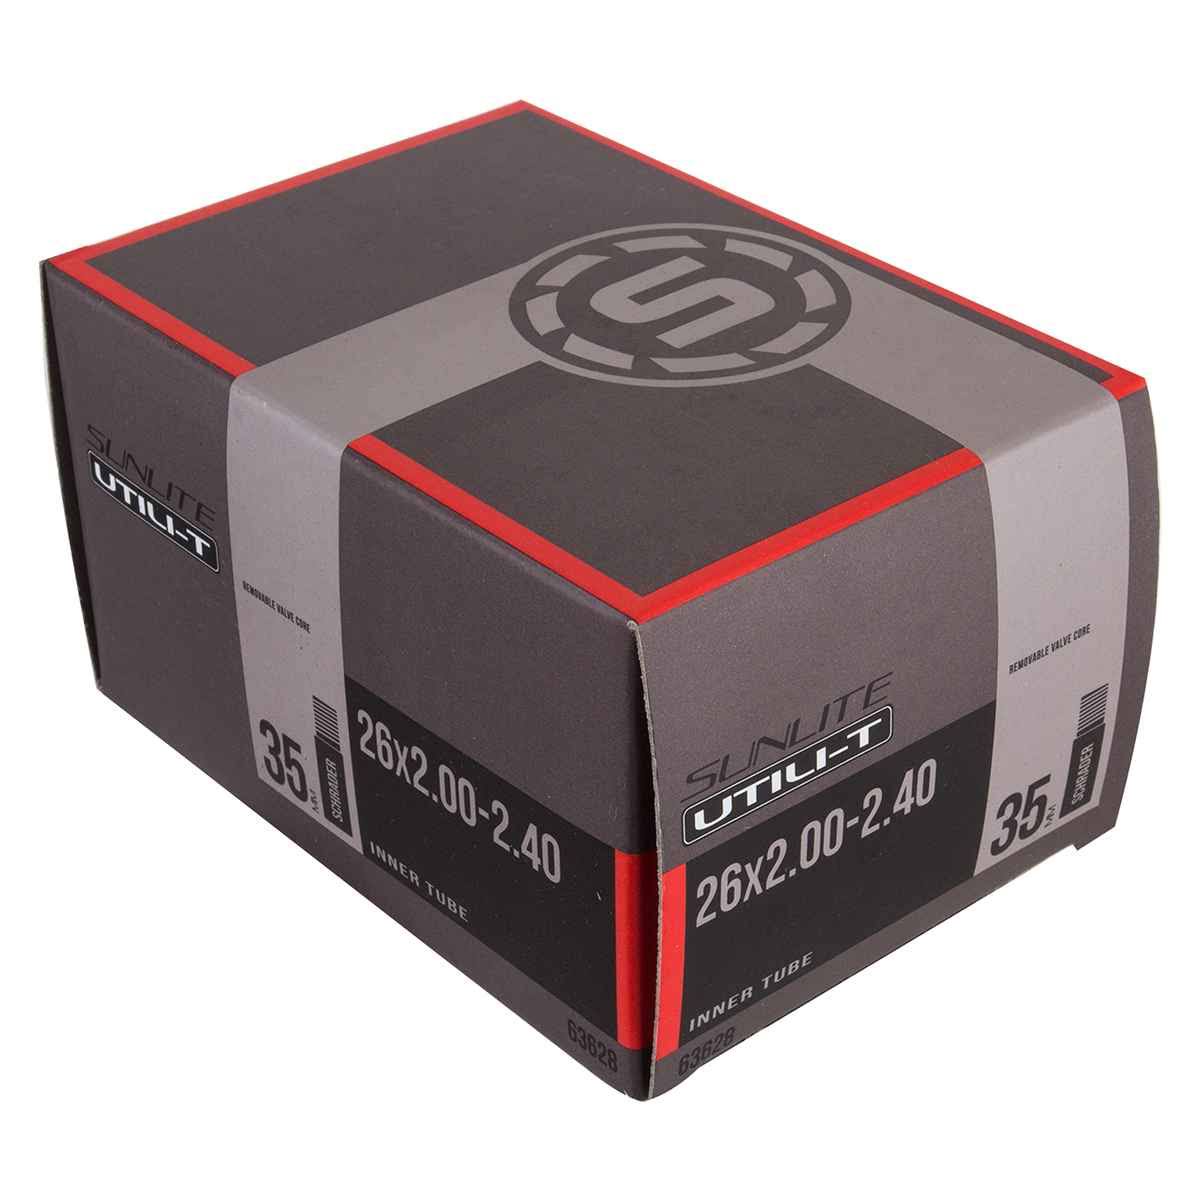 Sunlite Utili-T Standard Schrader Valve Tubes - 26" x 2.00-2.40", 35mm, Black